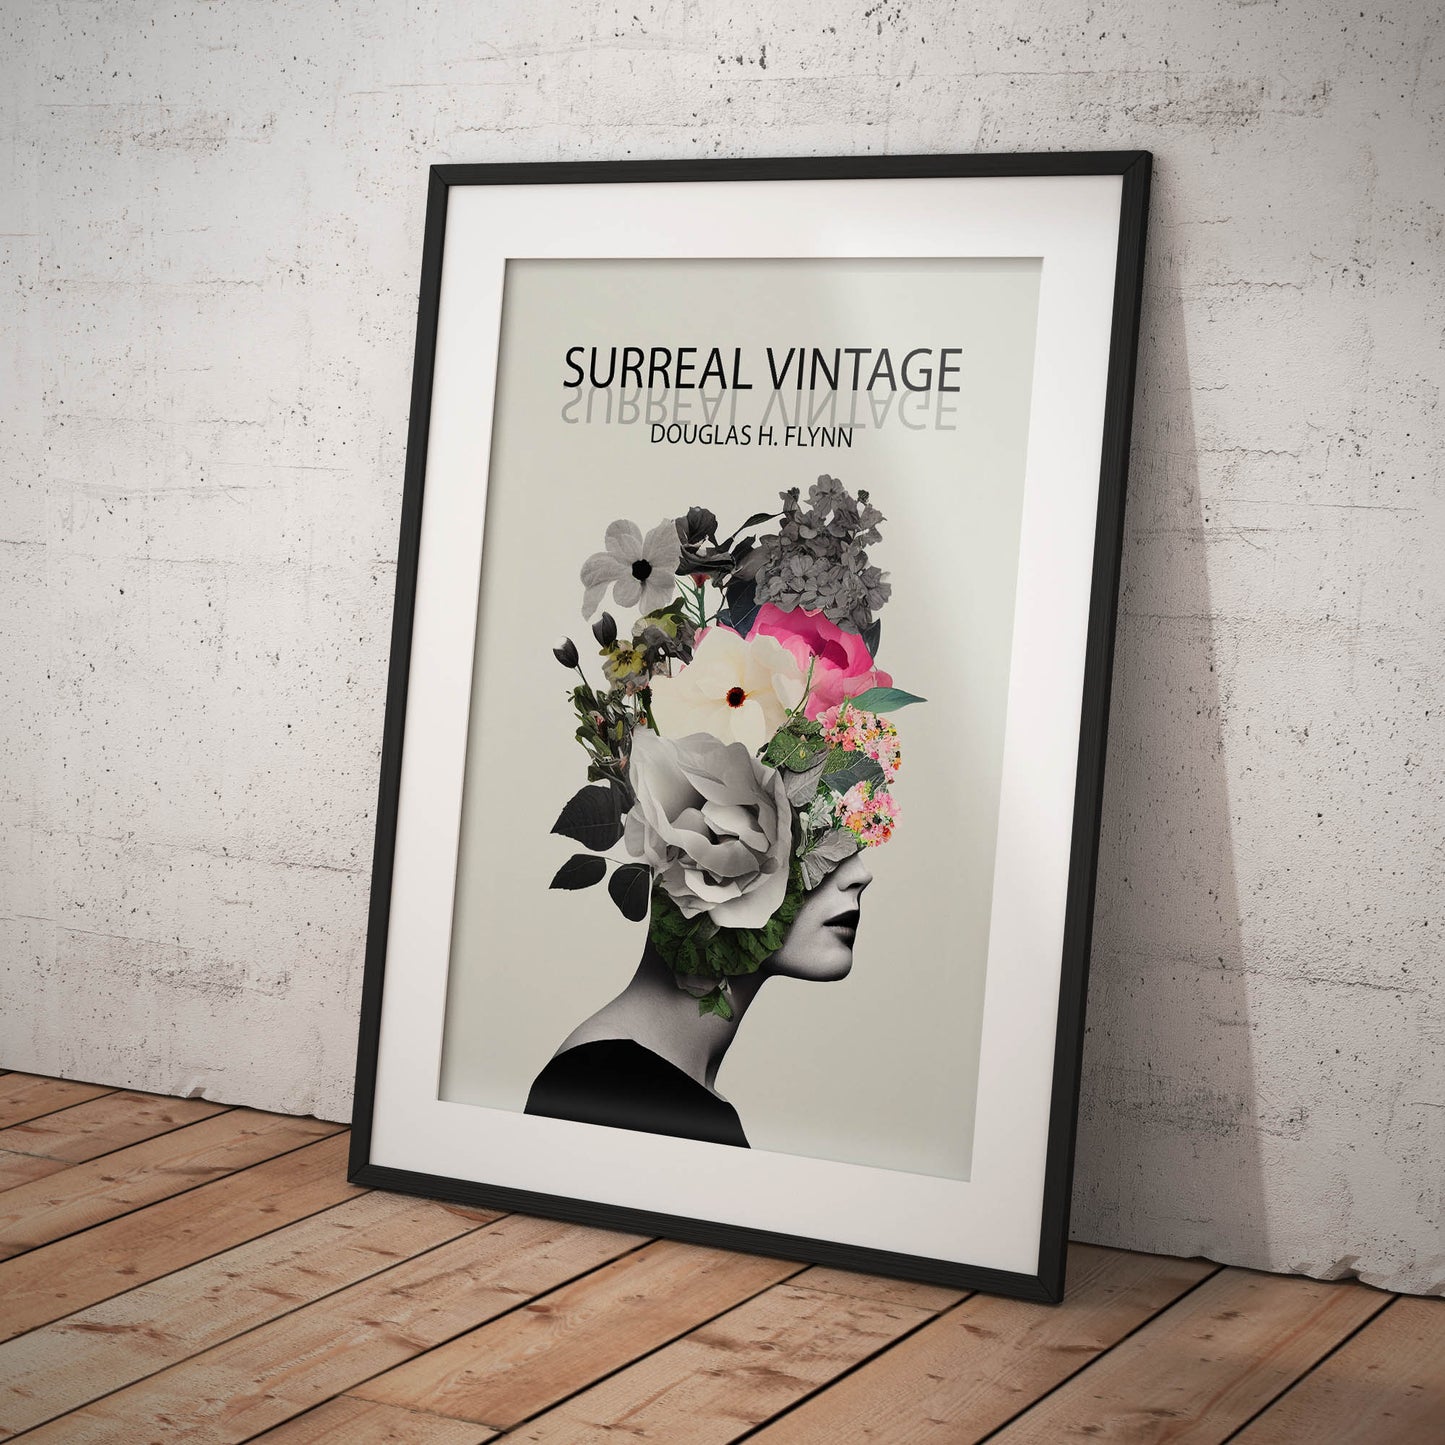 »Surreal Vintage« merch poster